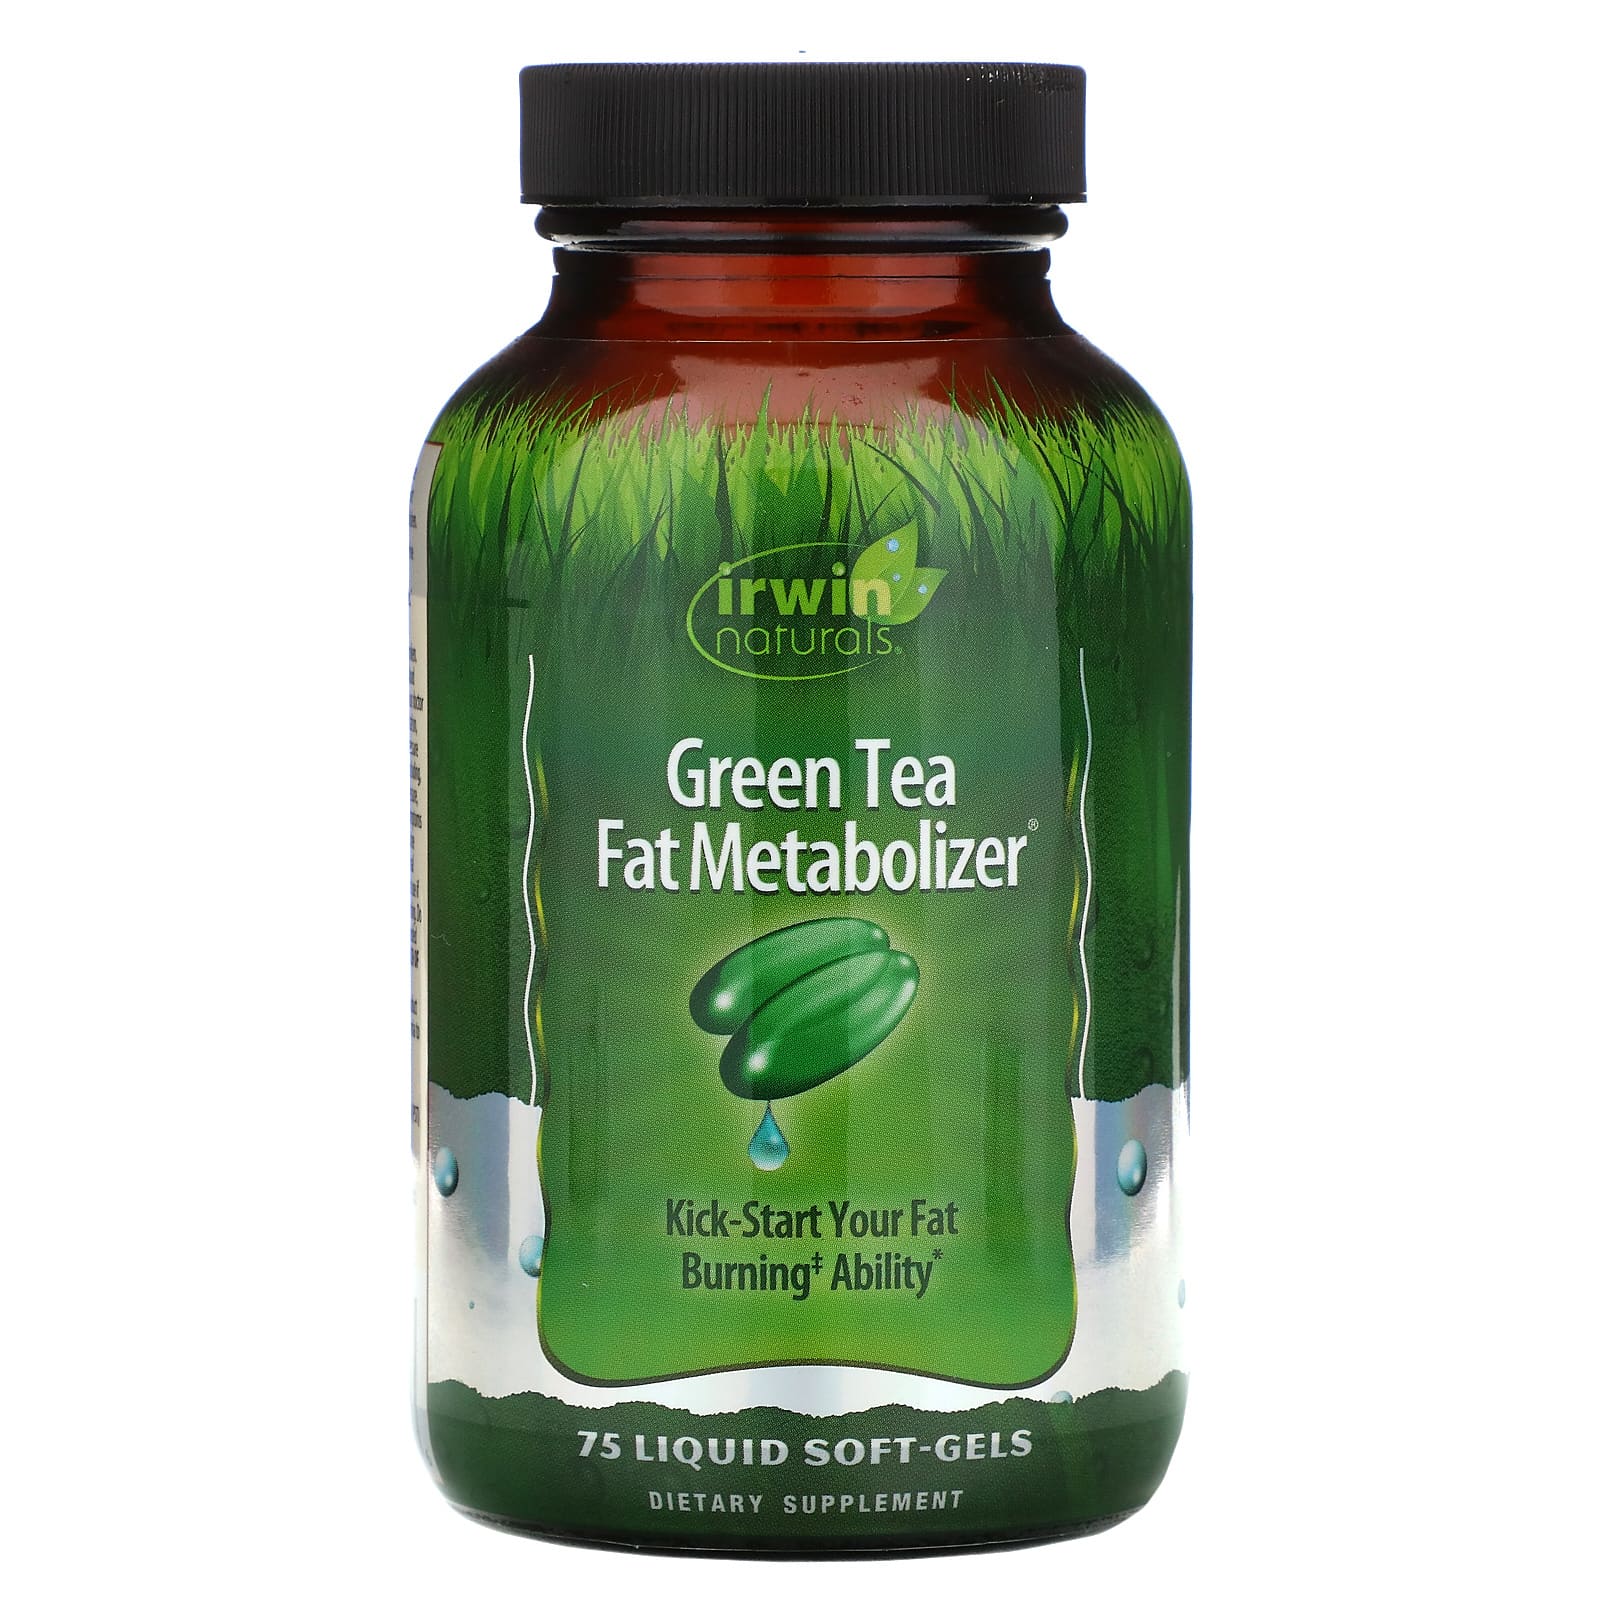 Irwin Naturals Green Tea Fat Metabolizer Dietary Supplement Liquid Softgels